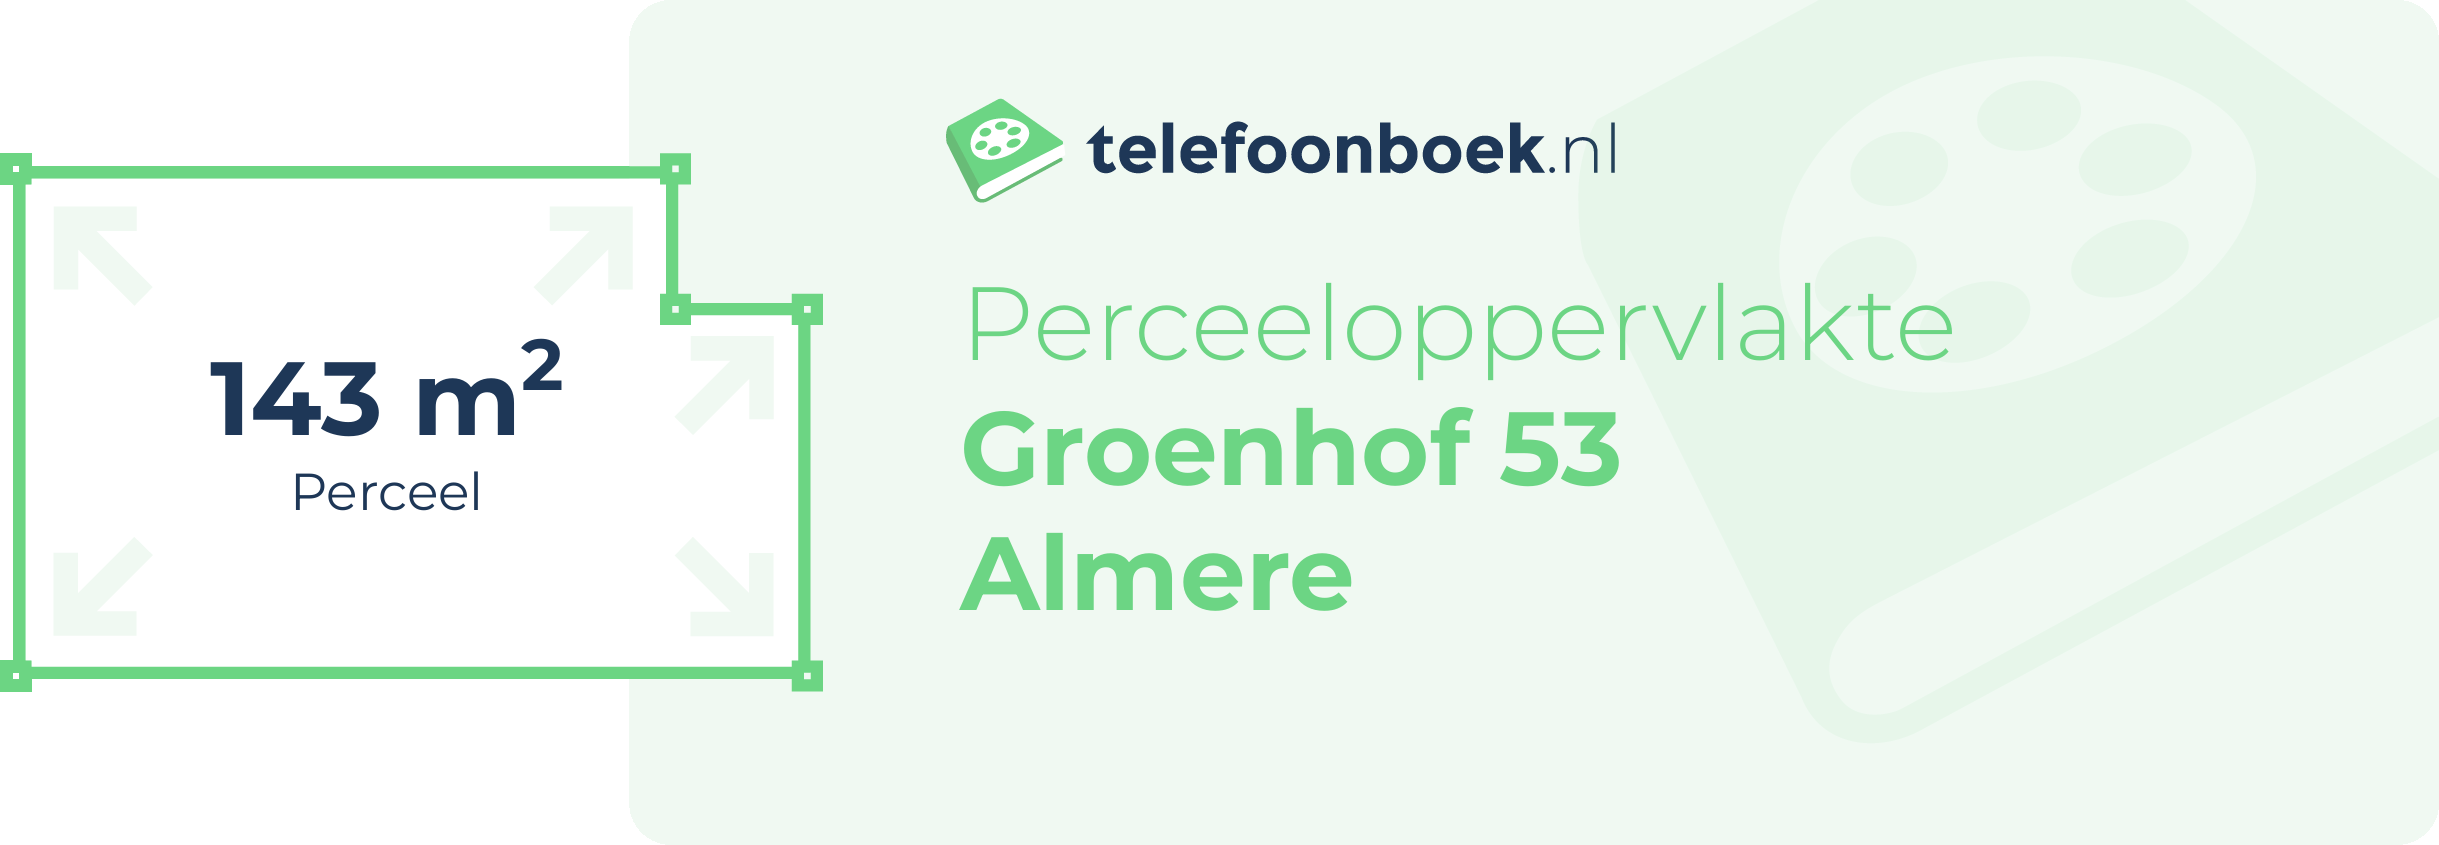 Perceeloppervlakte Groenhof 53 Almere